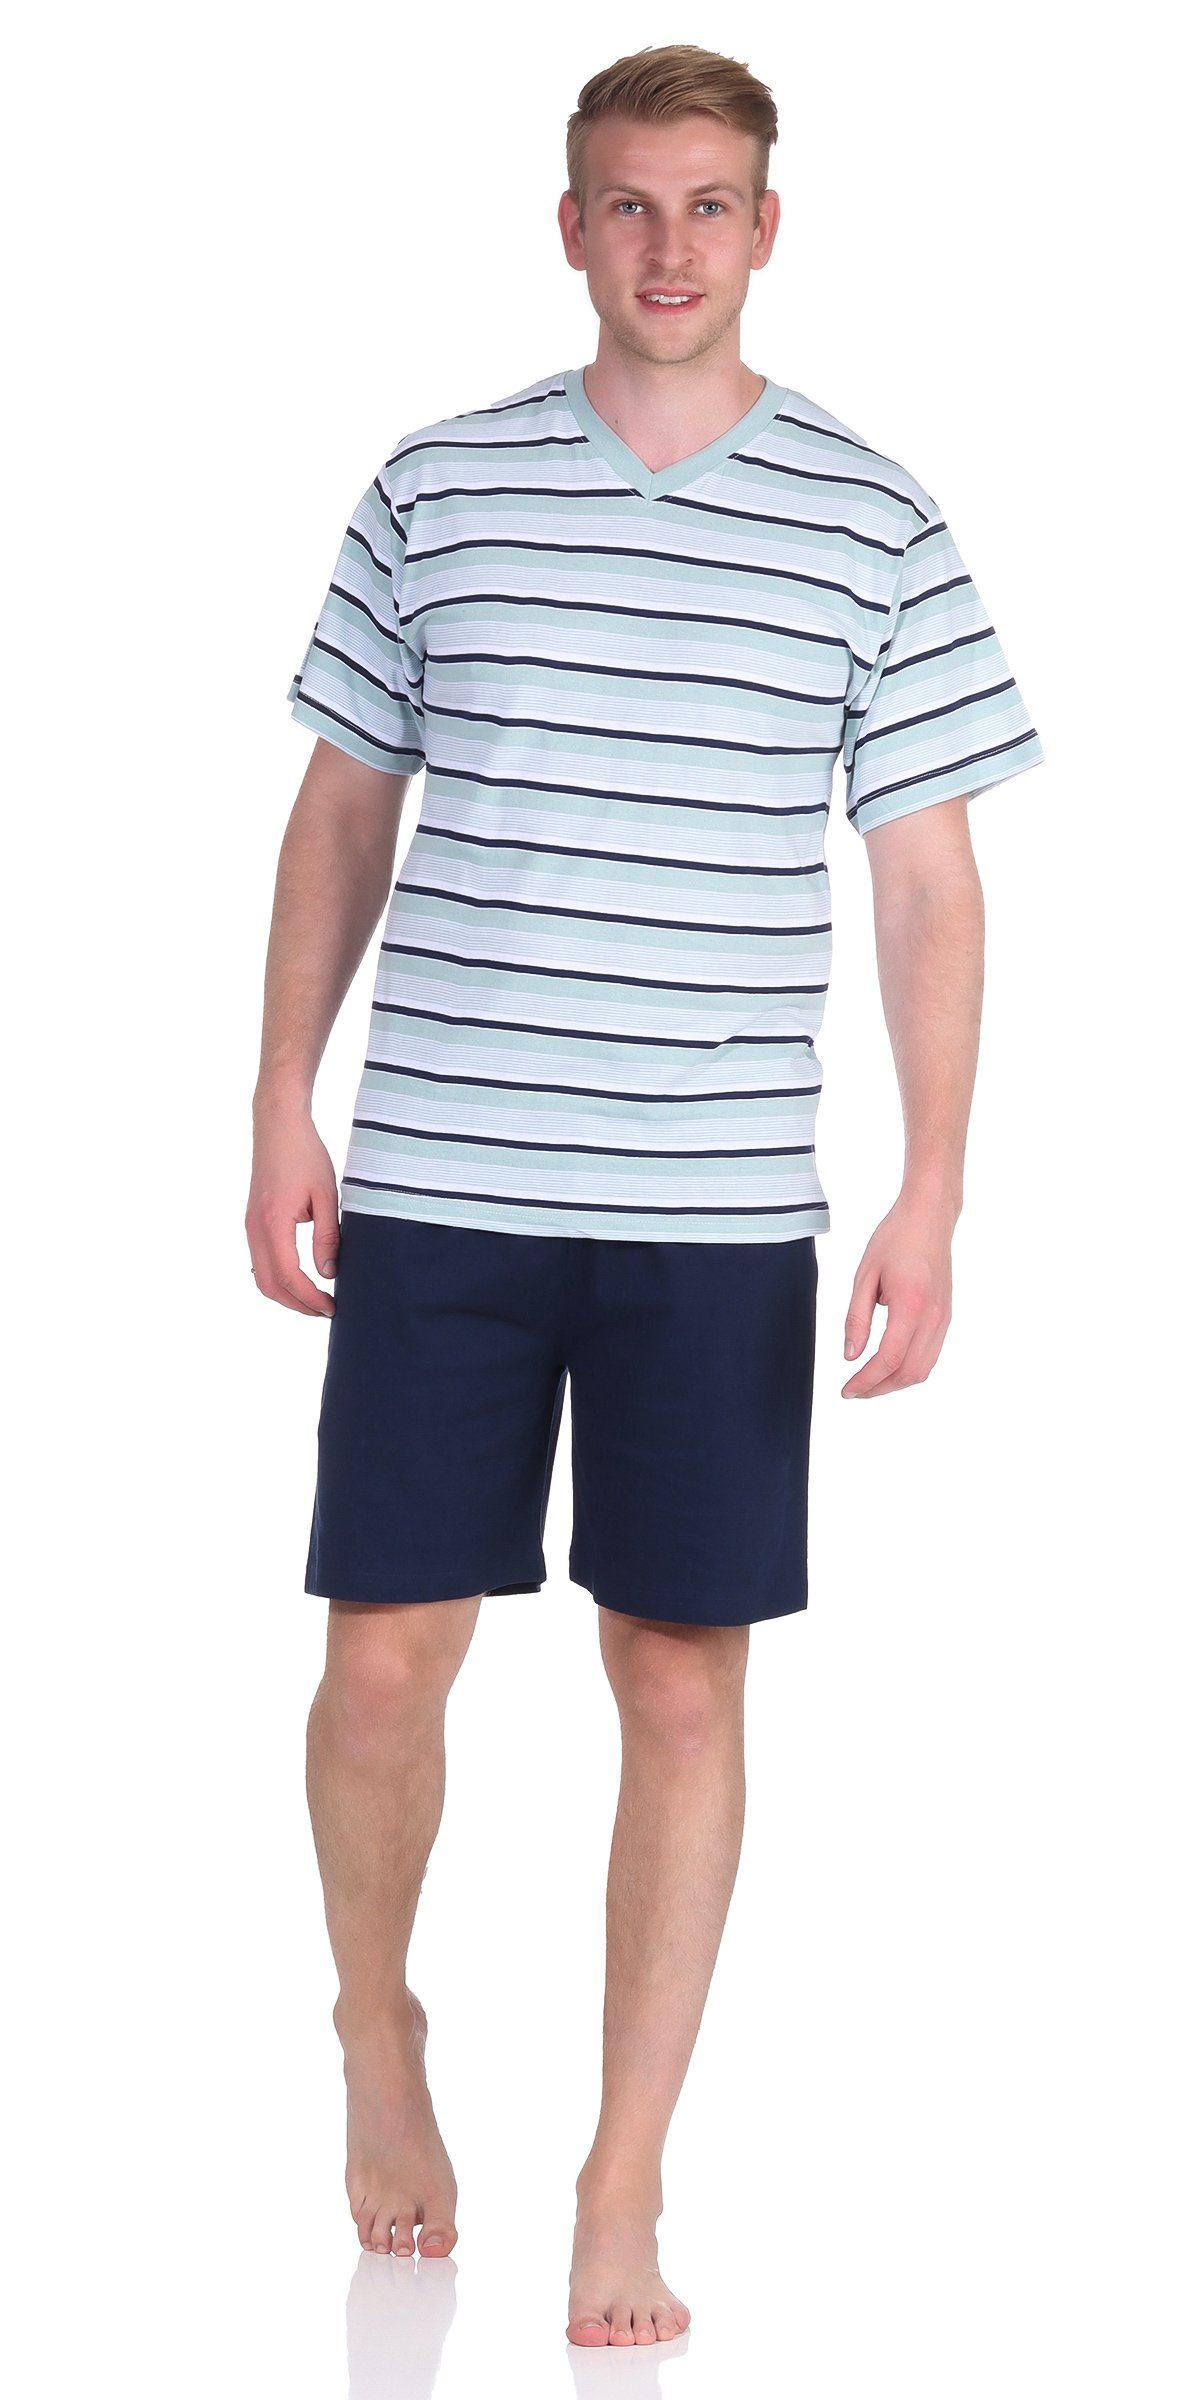 Moonline Shorty Herren mit Kurzarm Aqua 100% Single-Jersey Schlafanzug V-Ausschnitt Baumwolle Shorty